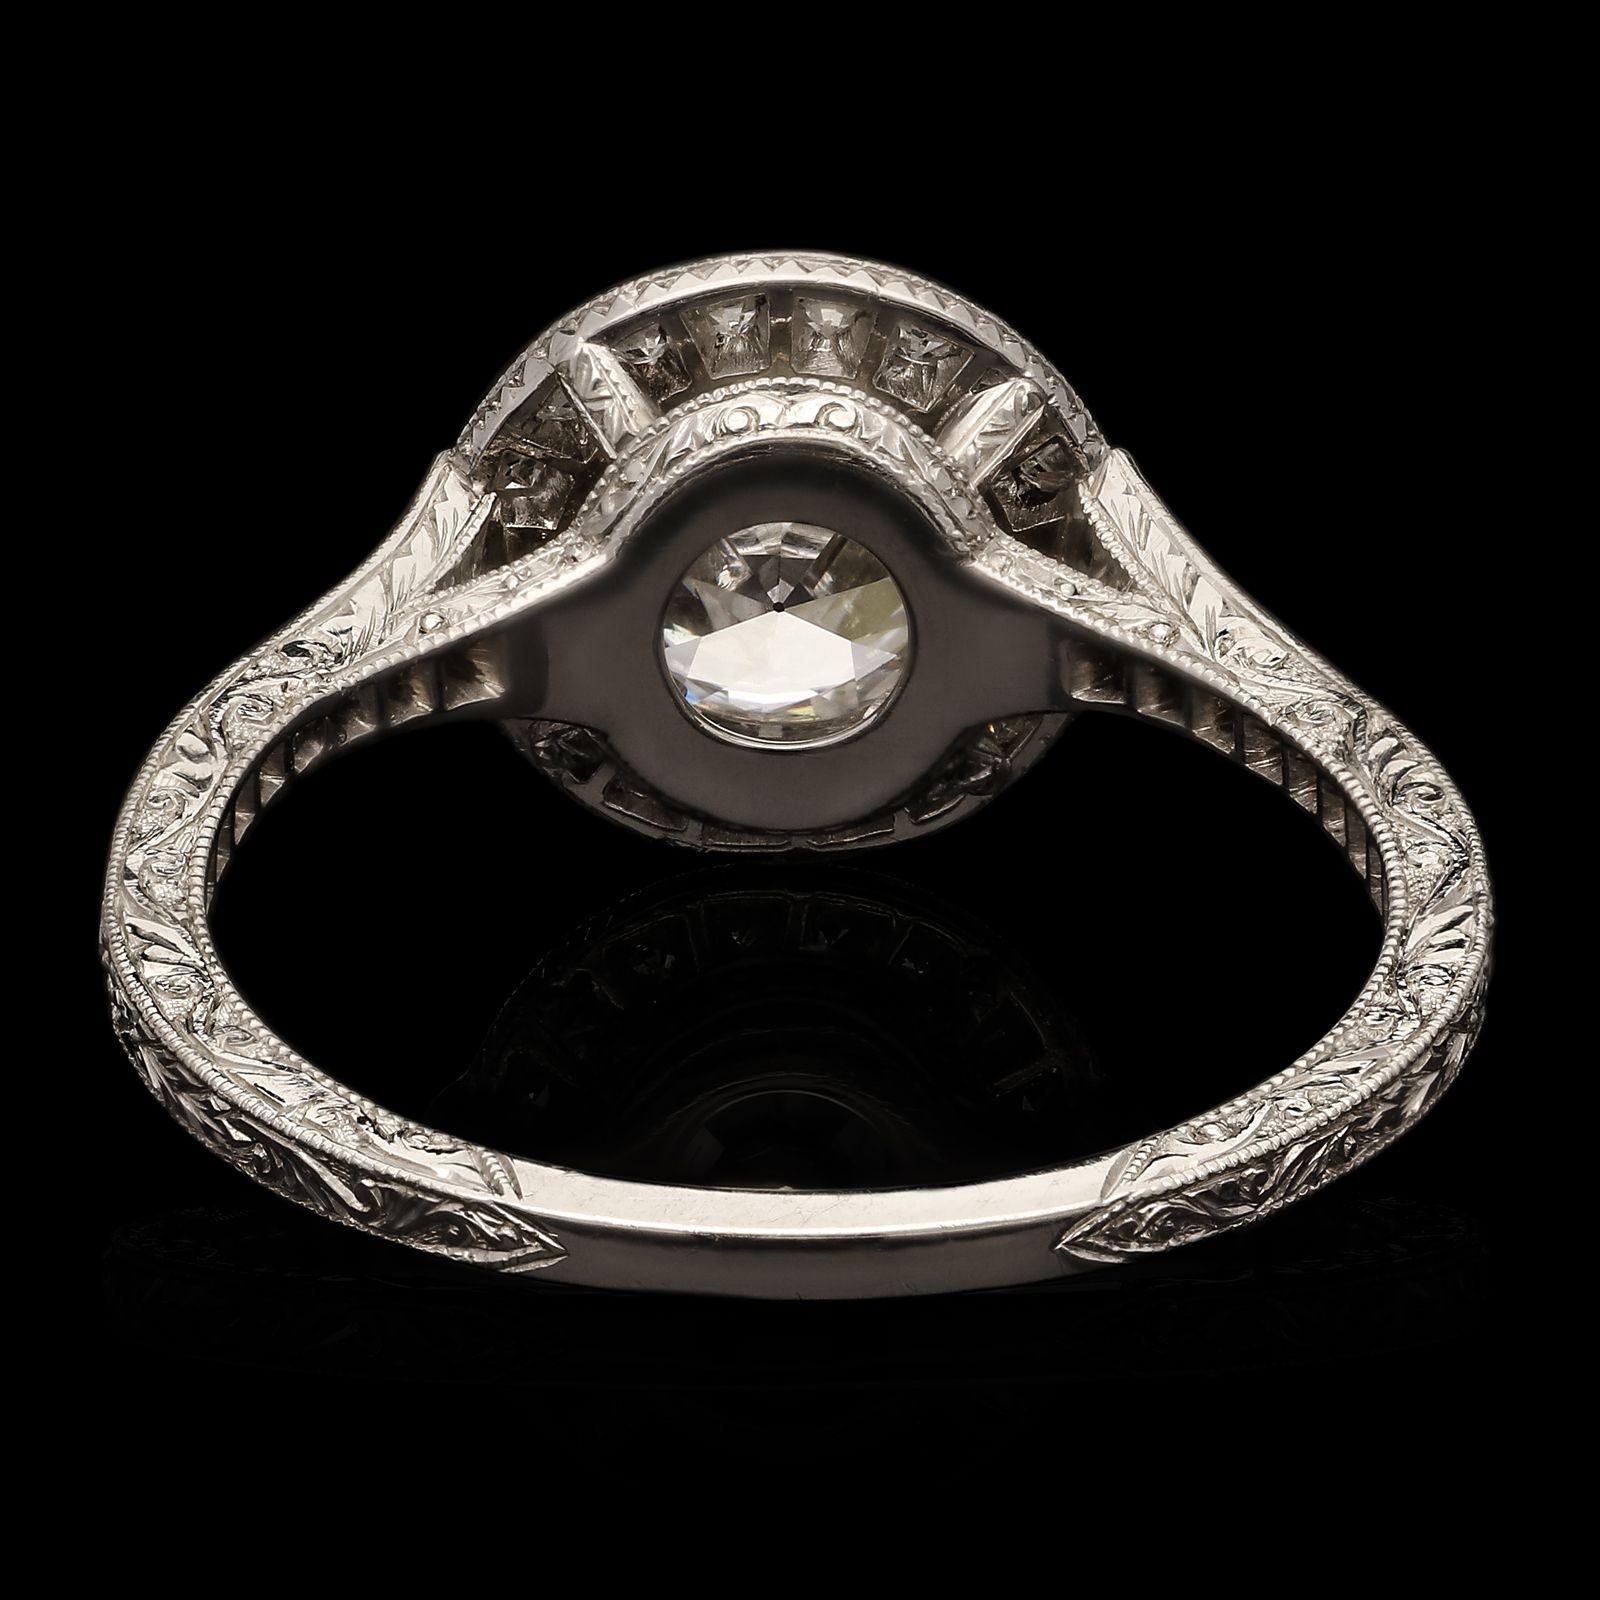 Hancocks Contemporary 1.28ct Brilliant Cut Diamond Ring With Halo Surround For Sale 1